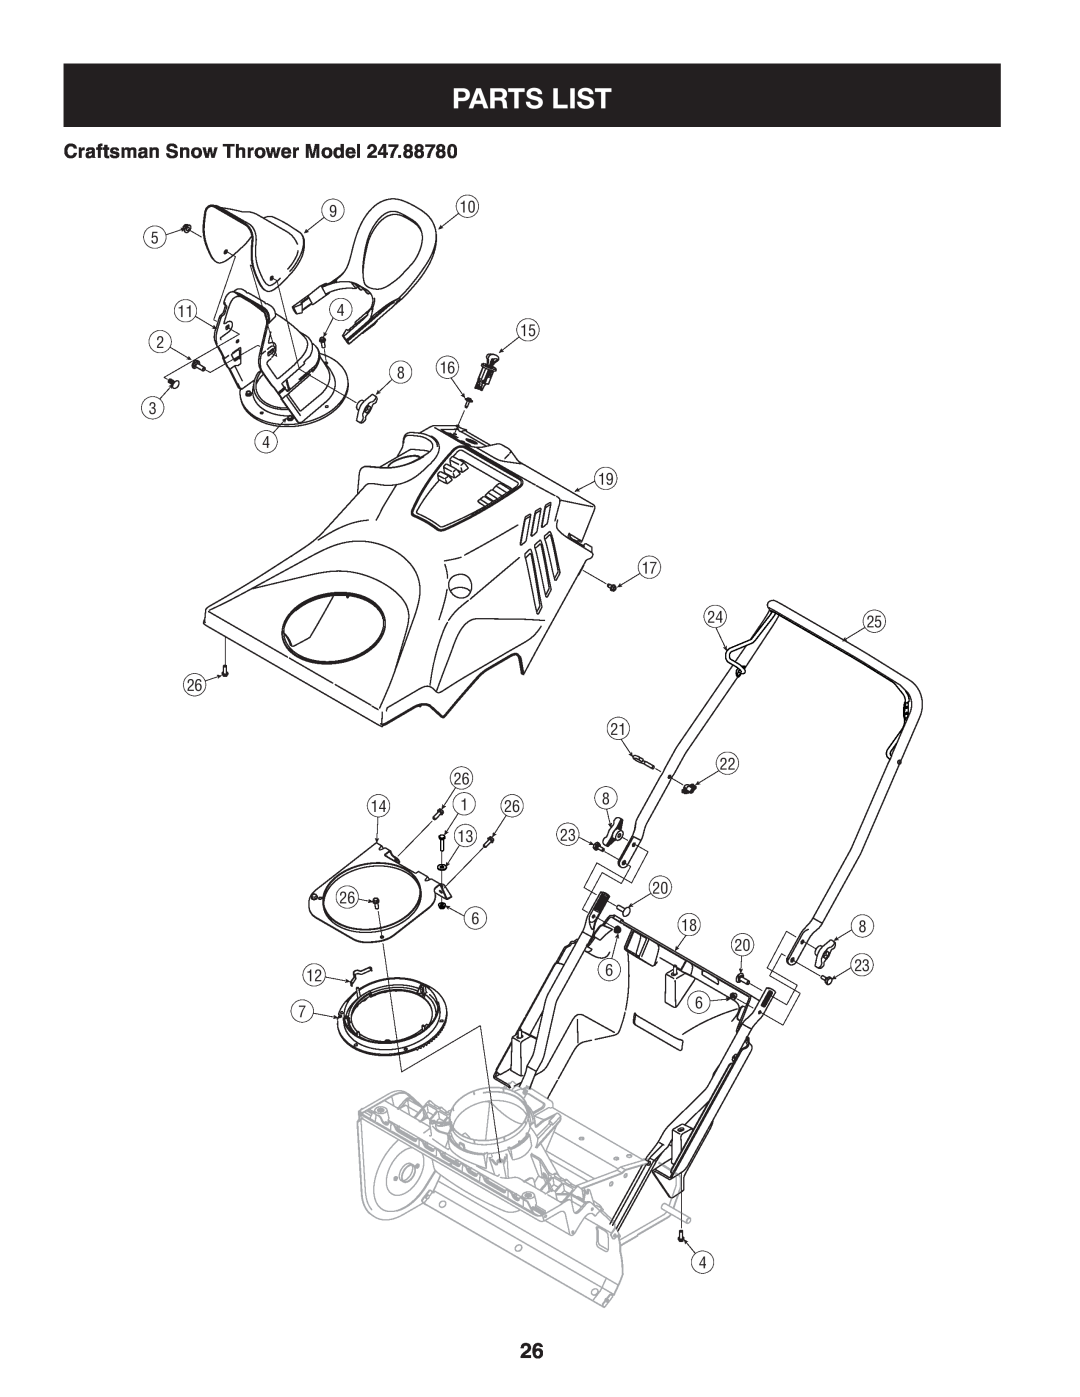 Craftsman 247.8878 manual Parts List, Craftsman Snow Thrower Model 